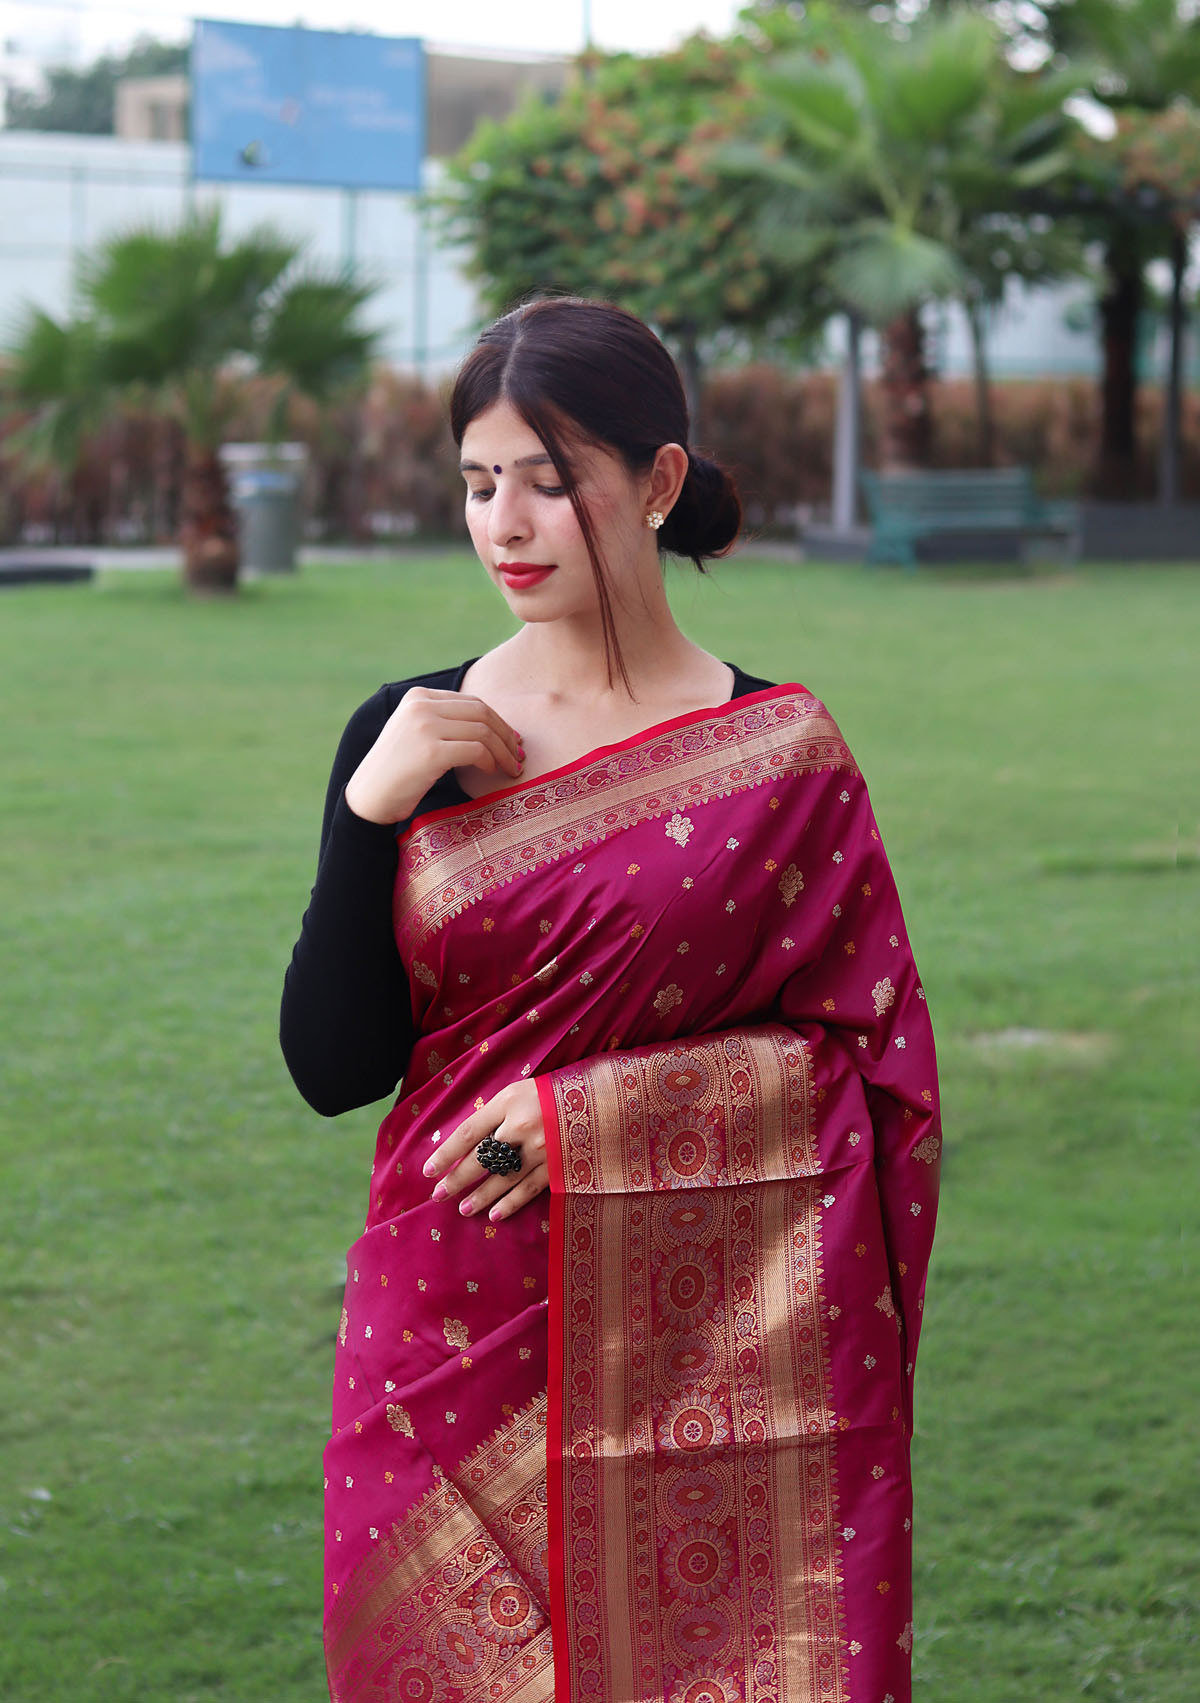 Beautiful Soft Silk Saree With Gold Zari Woven & Rich Pallu - Pink